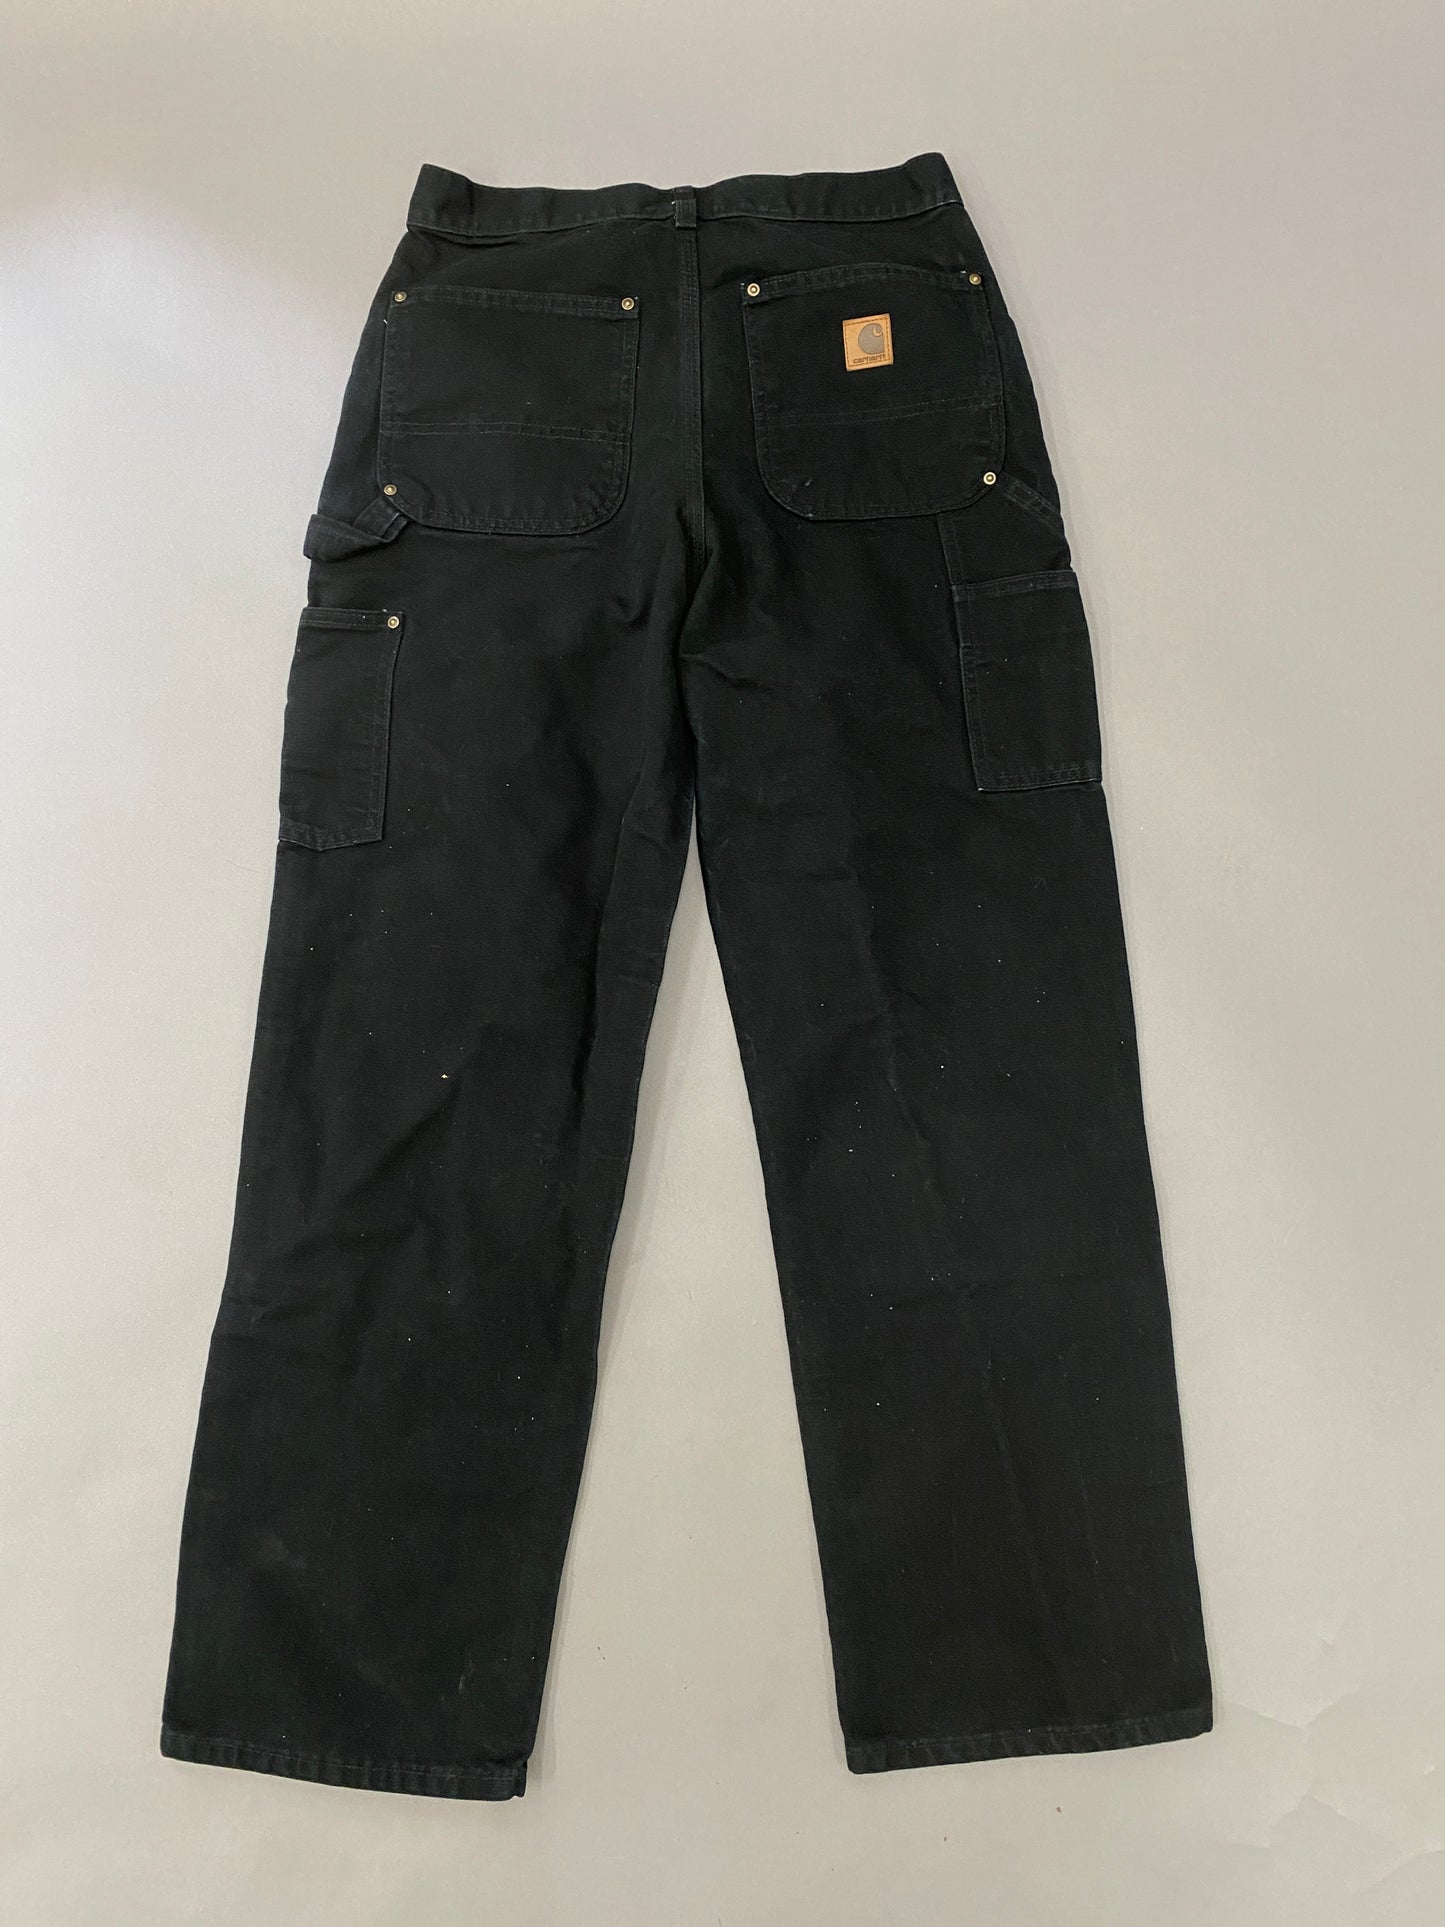 Double Knee Carhartt Jeans Vintage - 31 x 32